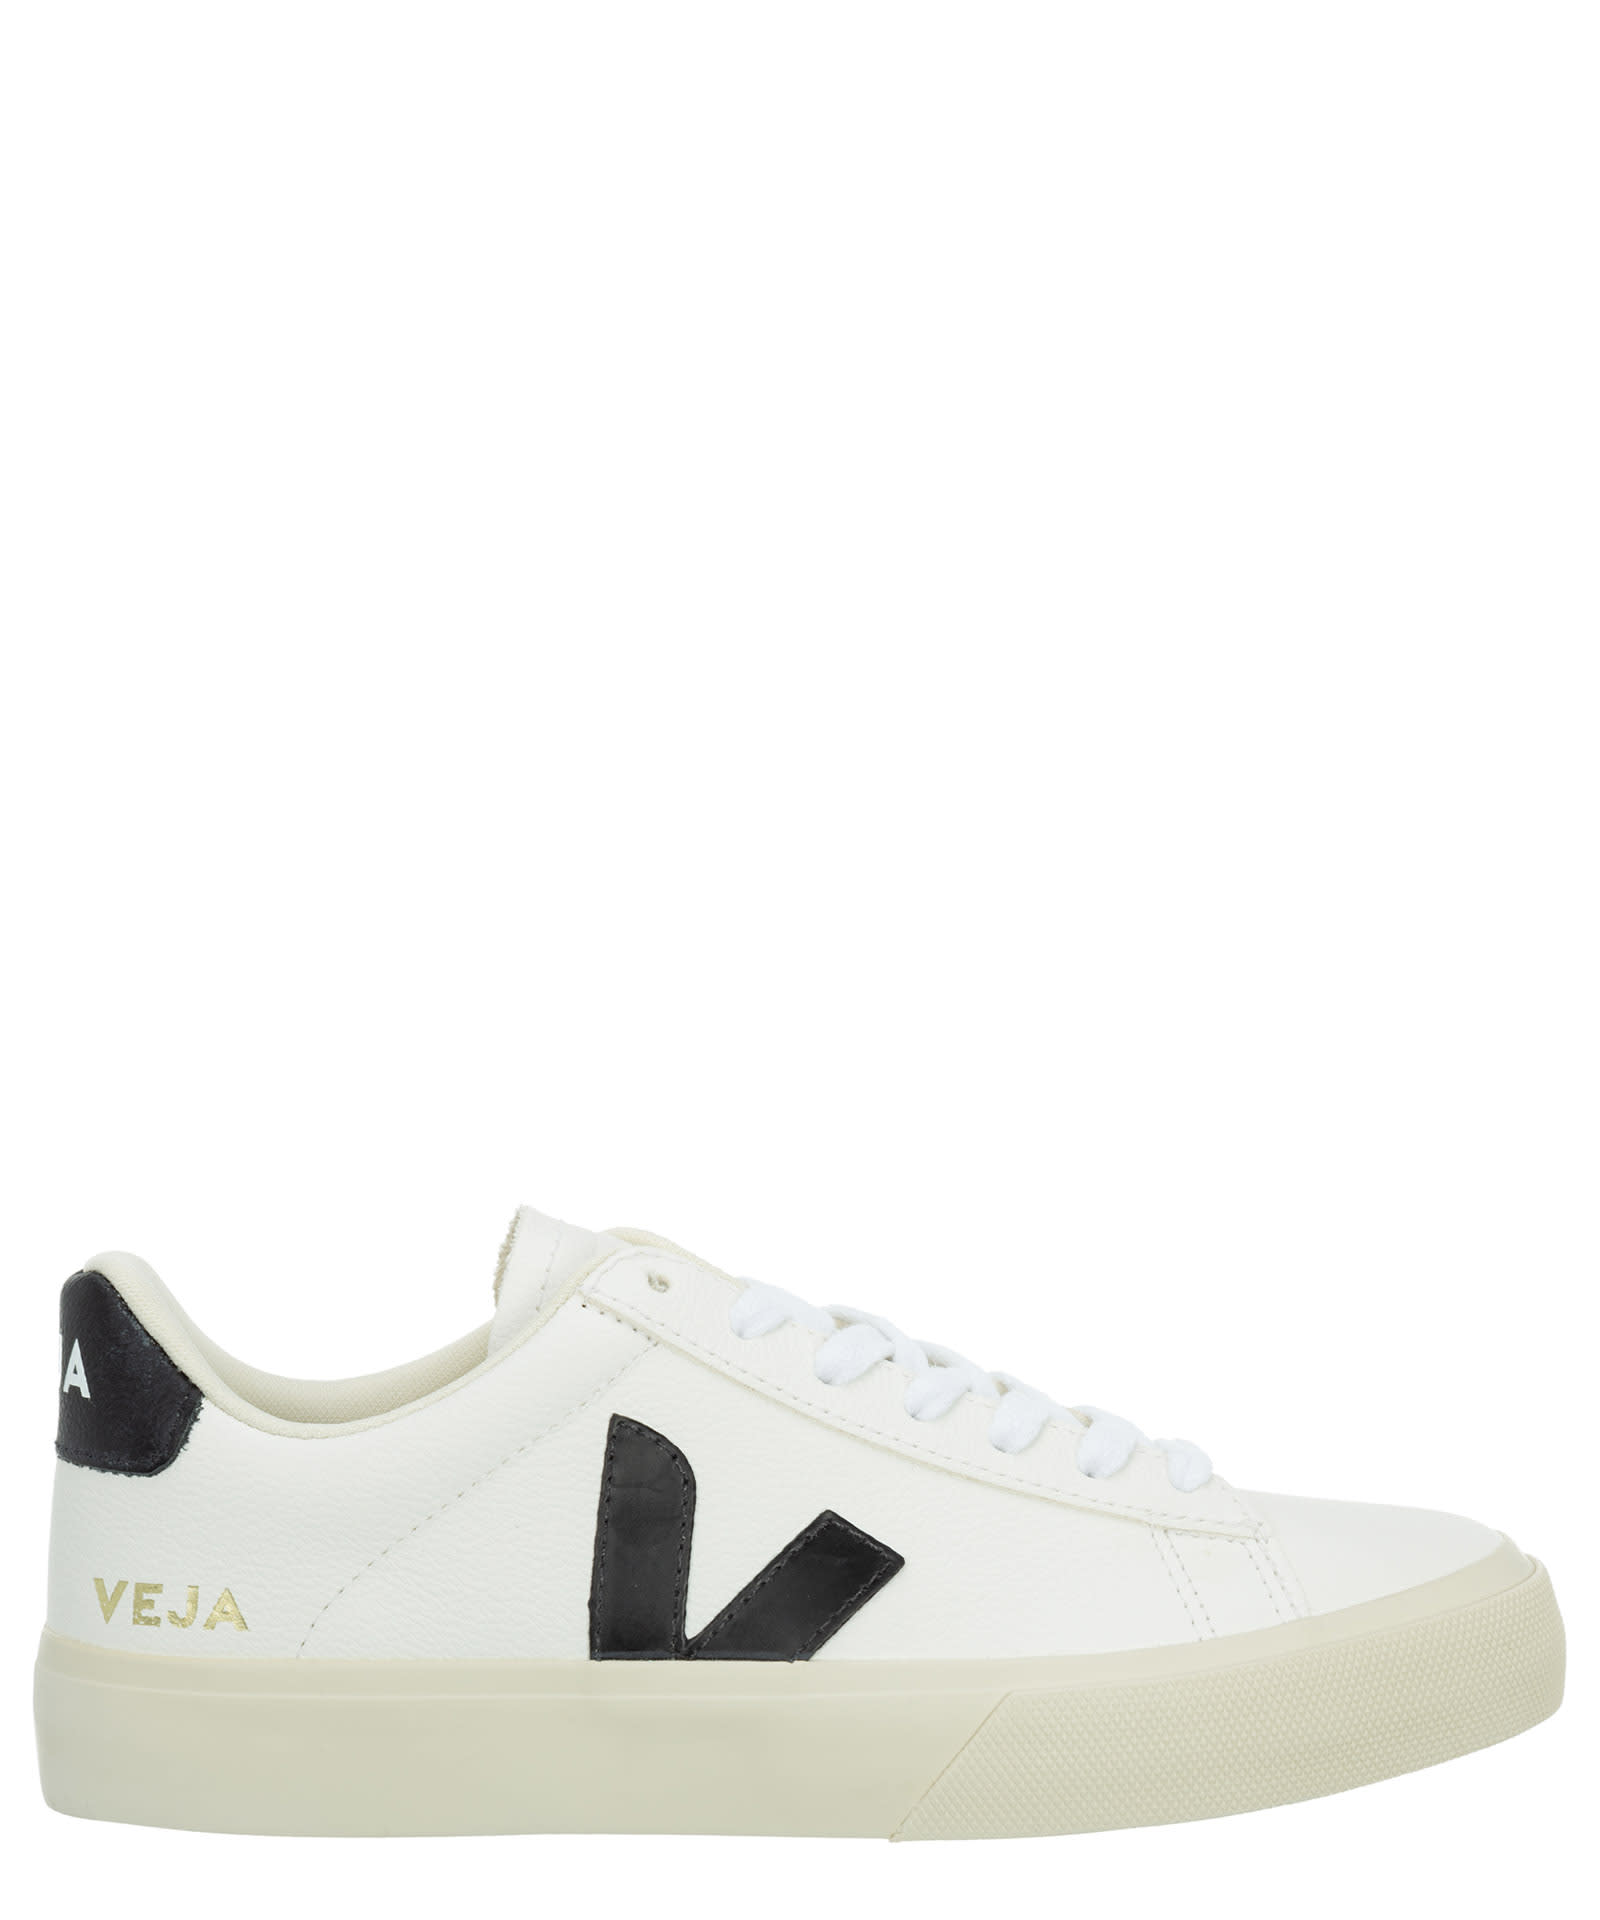 Veja Campo Leather Sneakers In White/black